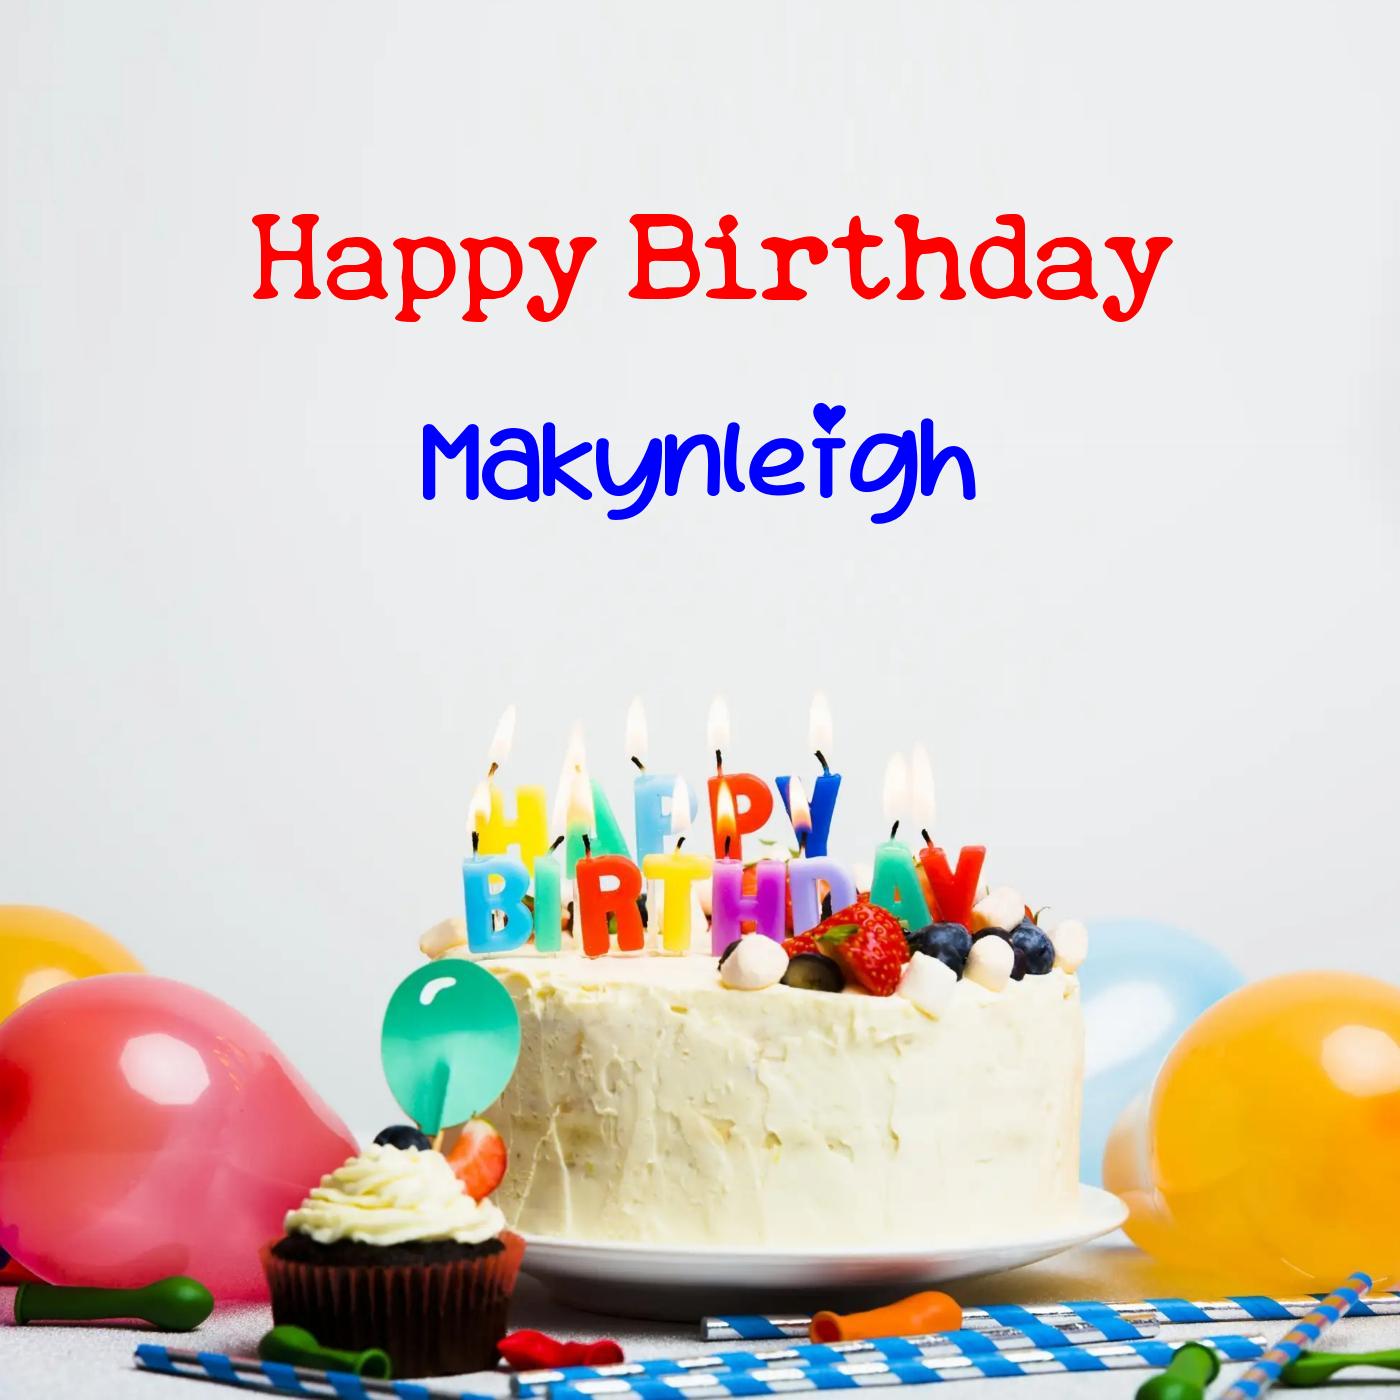 Happy Birthday Makynleigh Cake Balloons Card